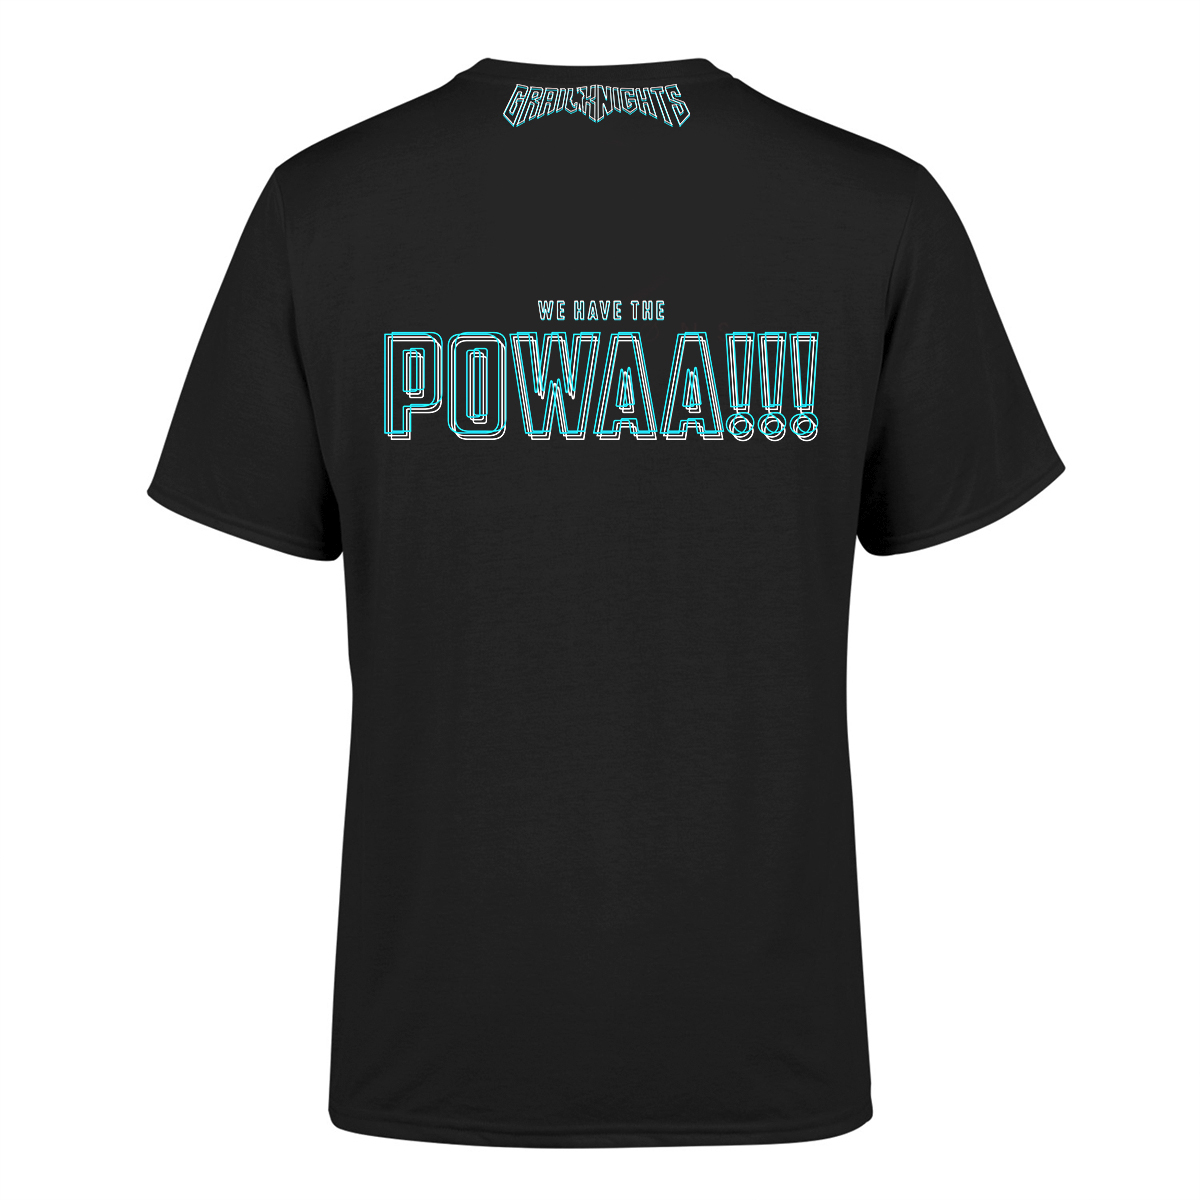 Grailknights T-Shirt Powaa!!!